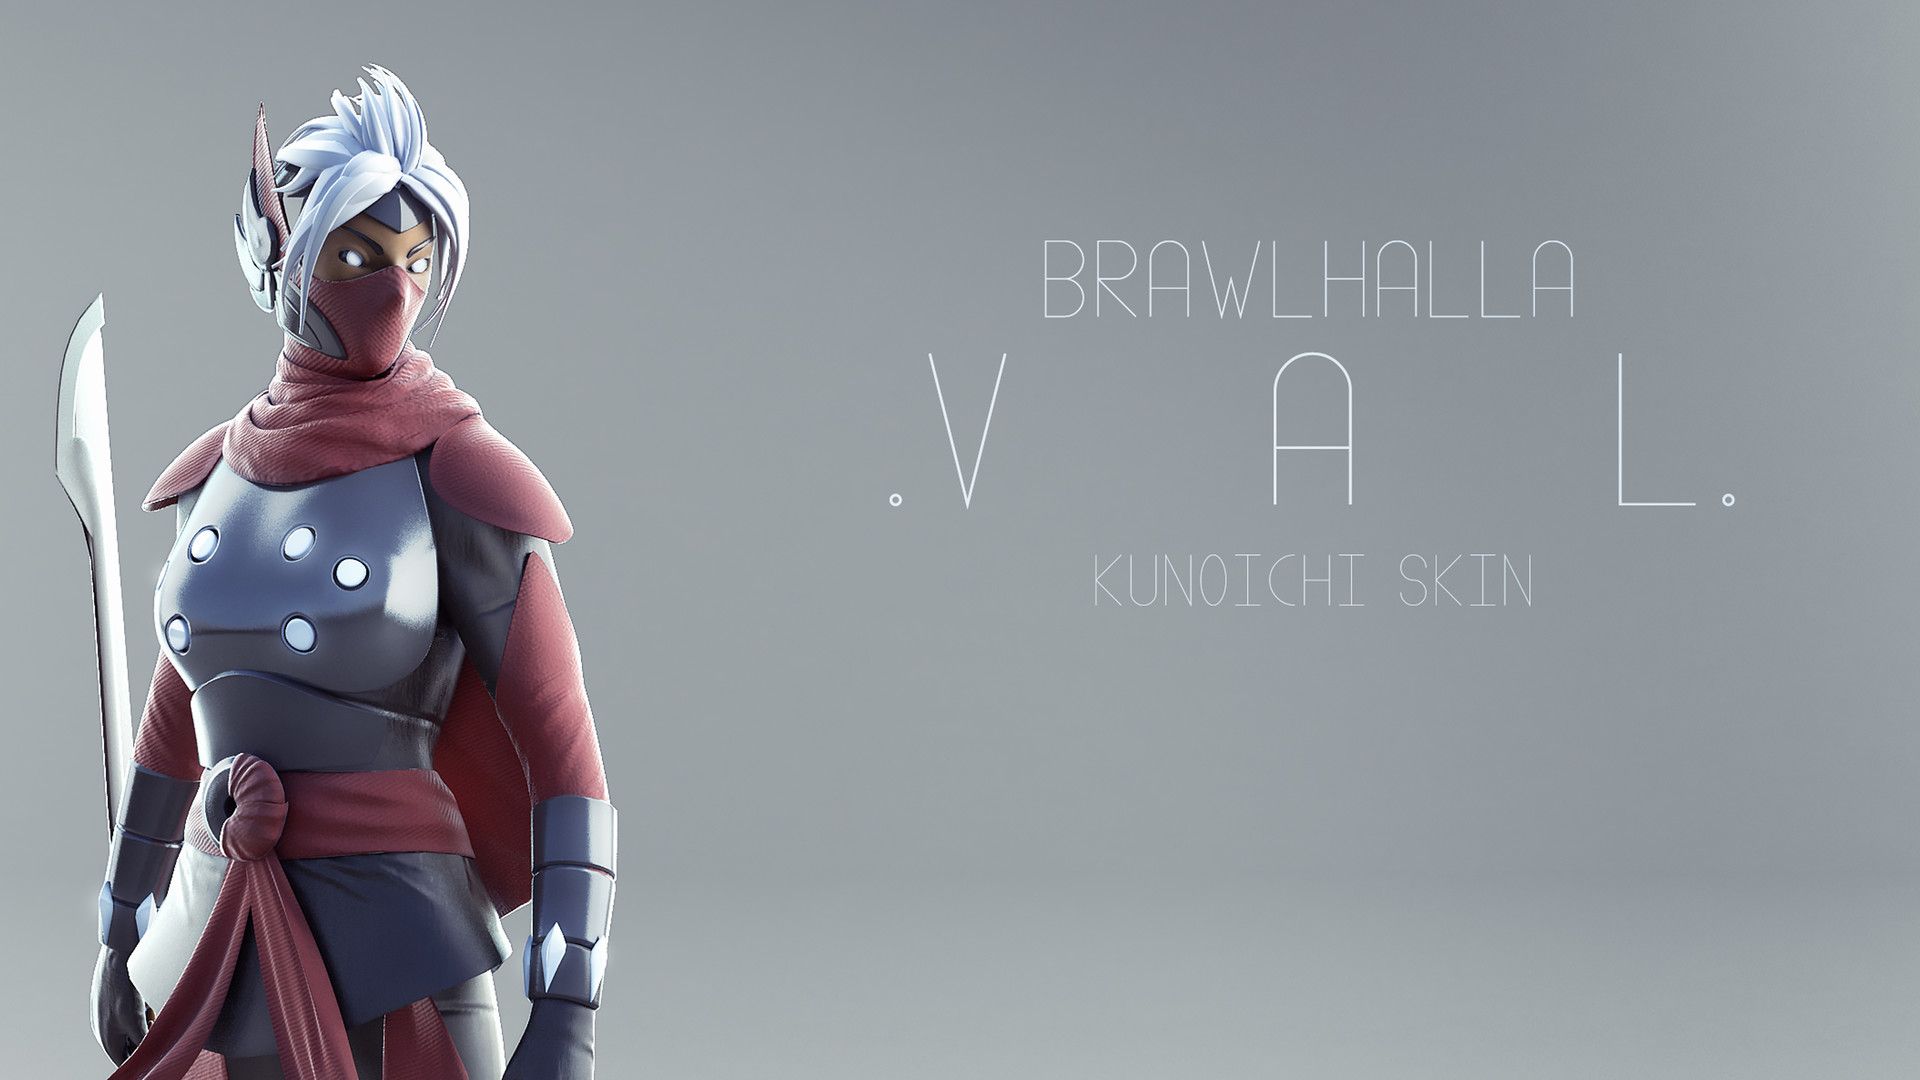 Kunoichi Val from Brawlhalla